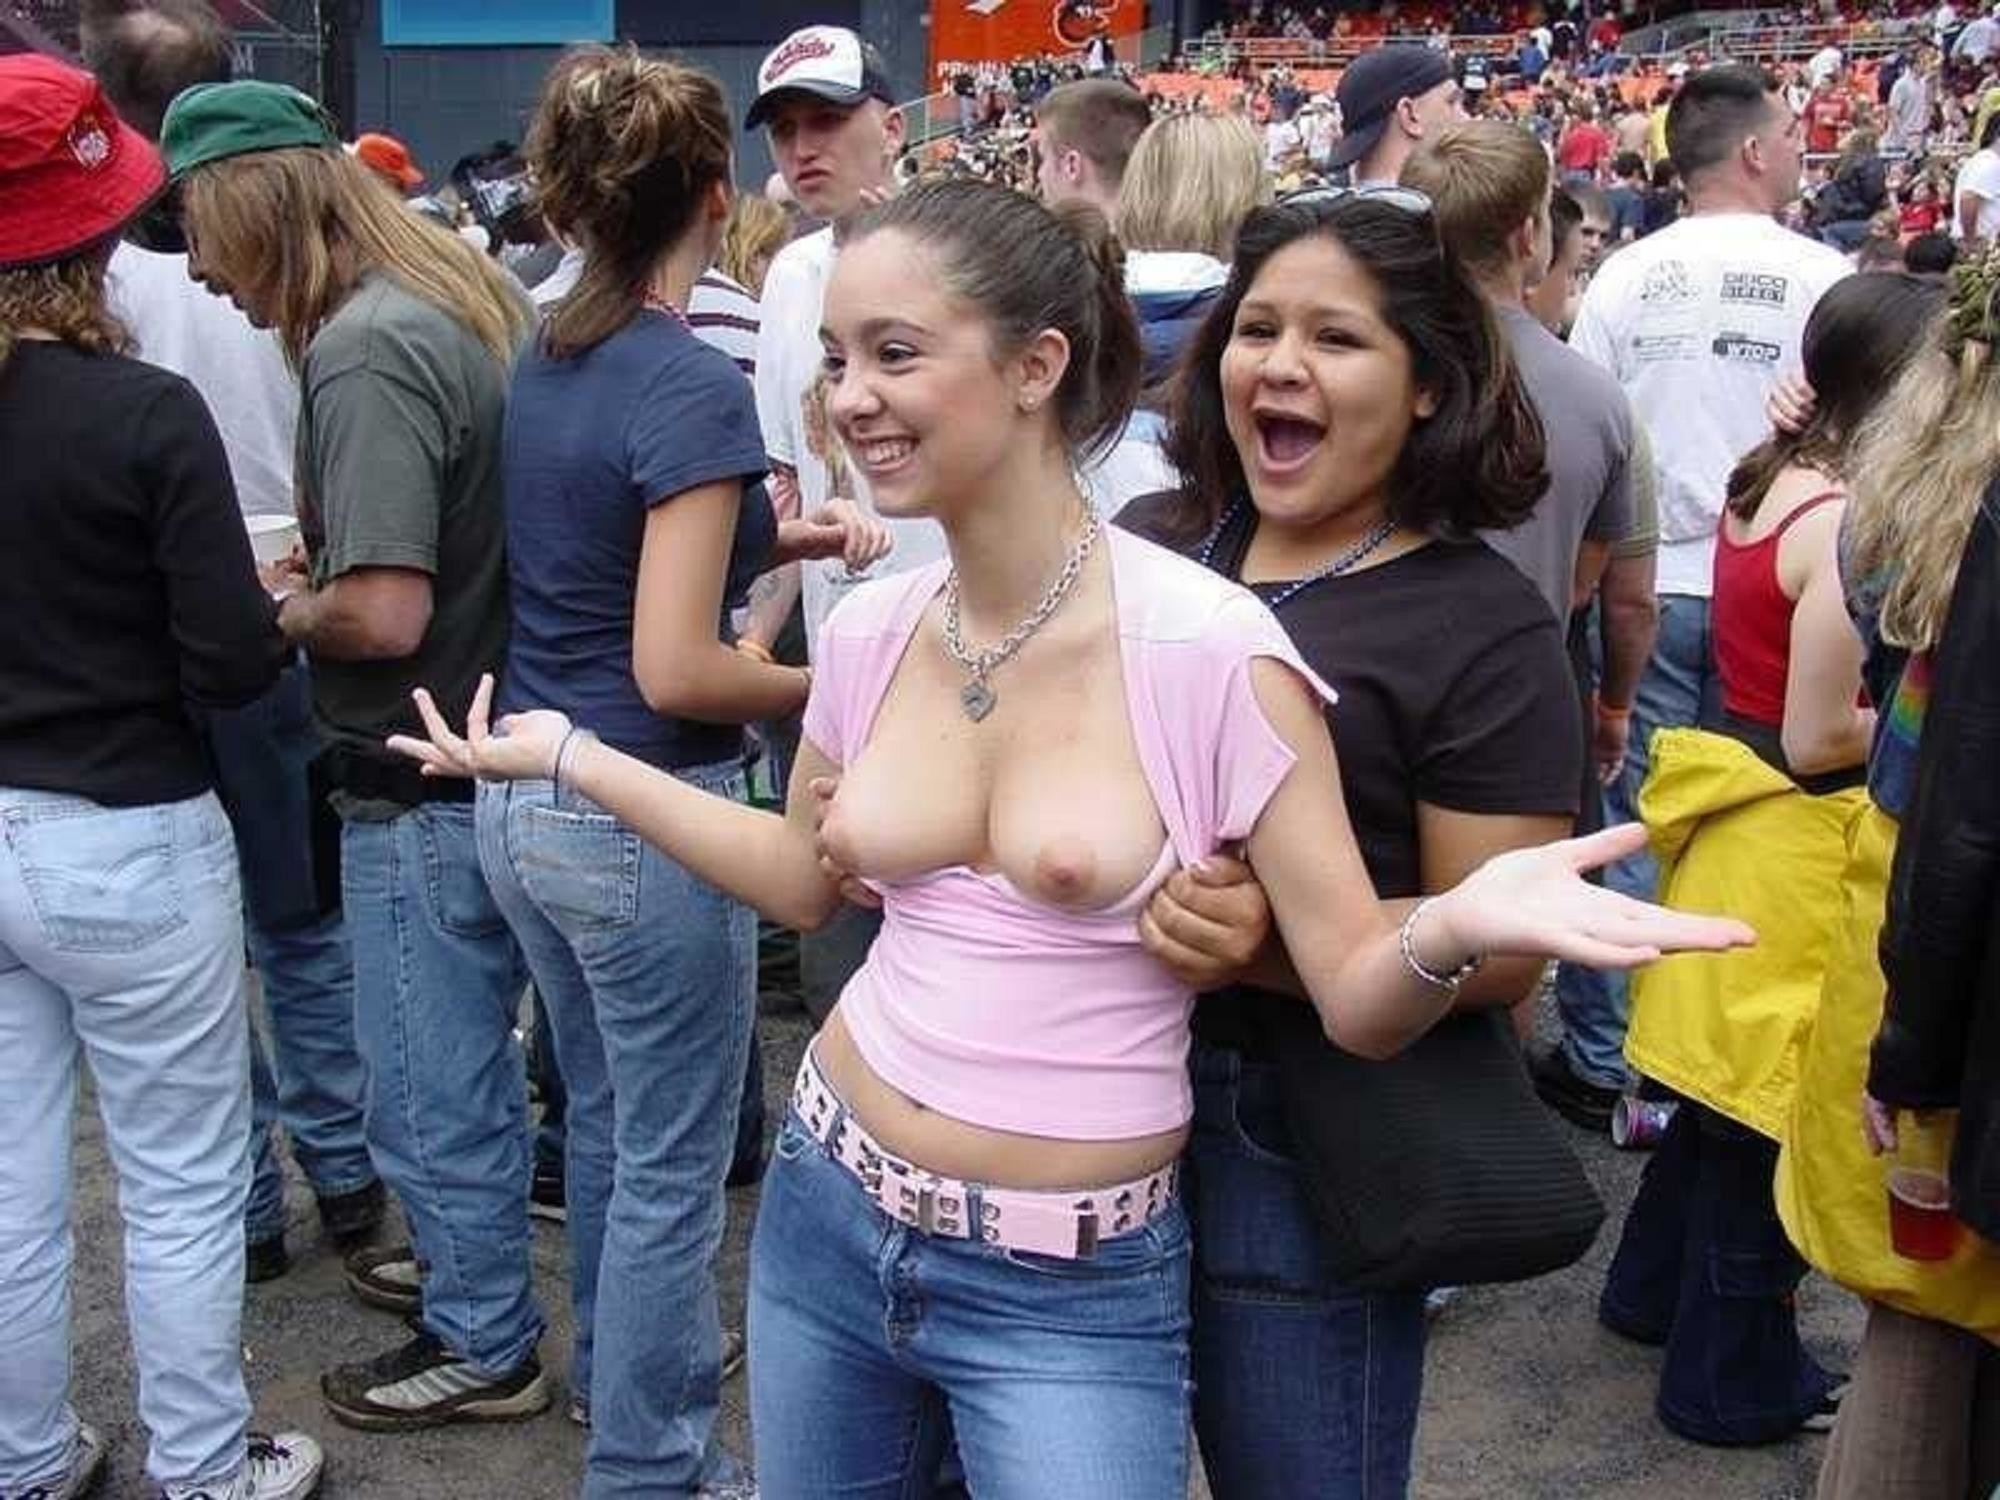 Hot young girls flashing boobs